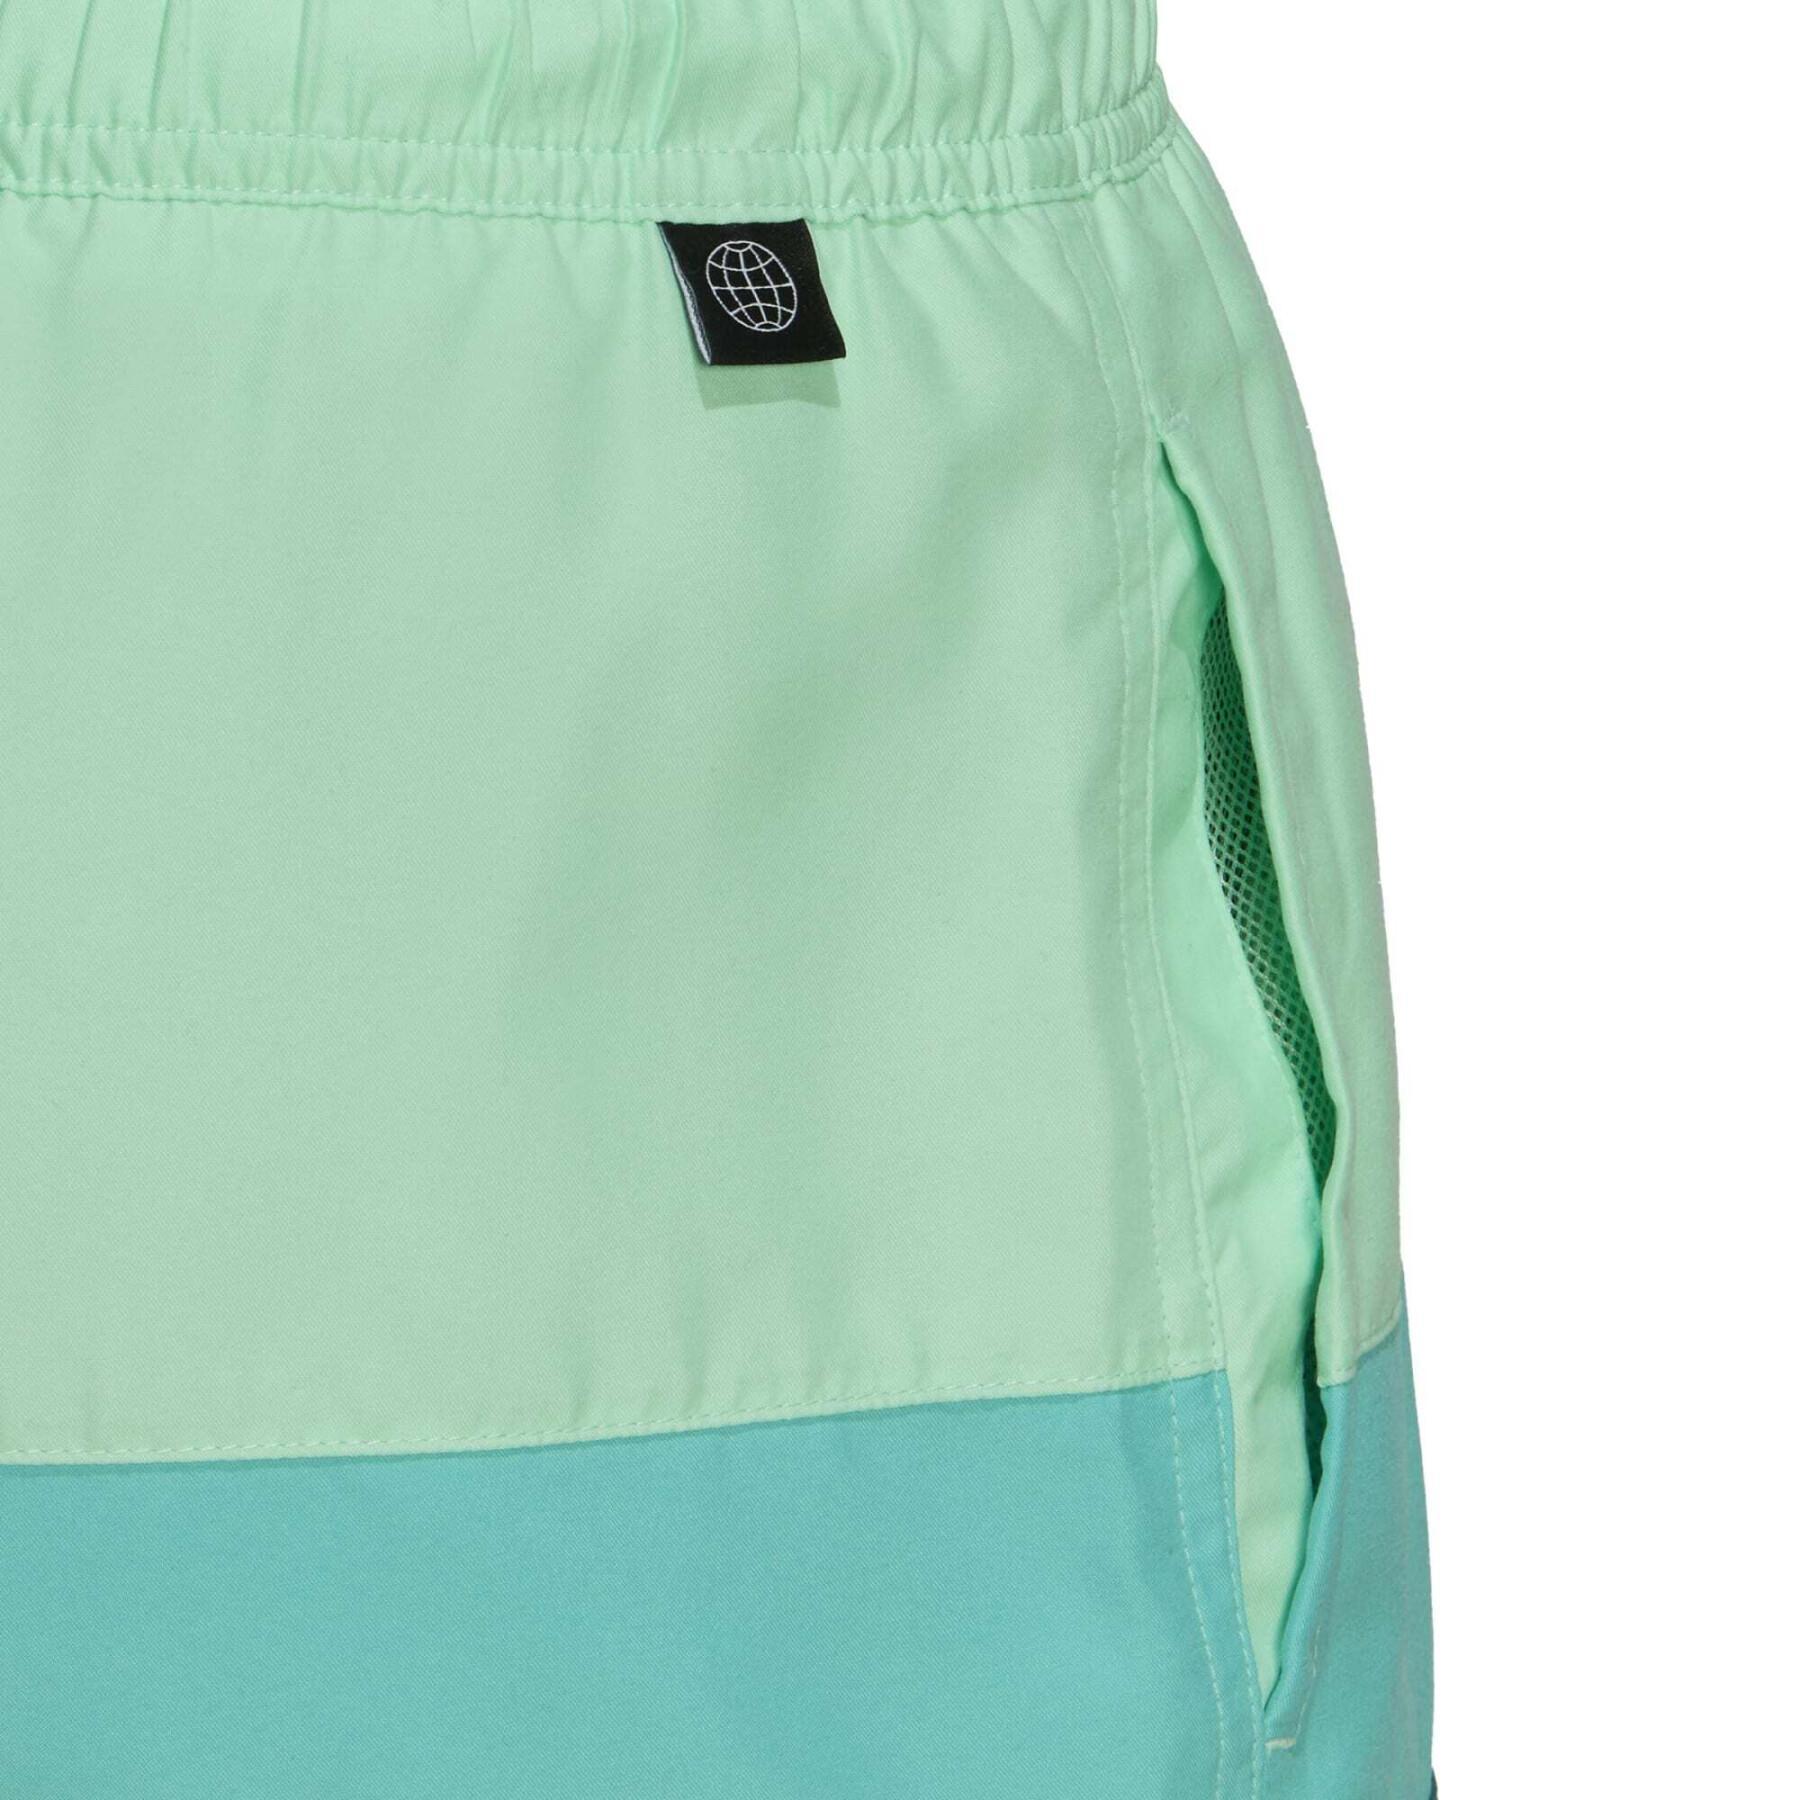 Short swim shorts with color blocks adidas